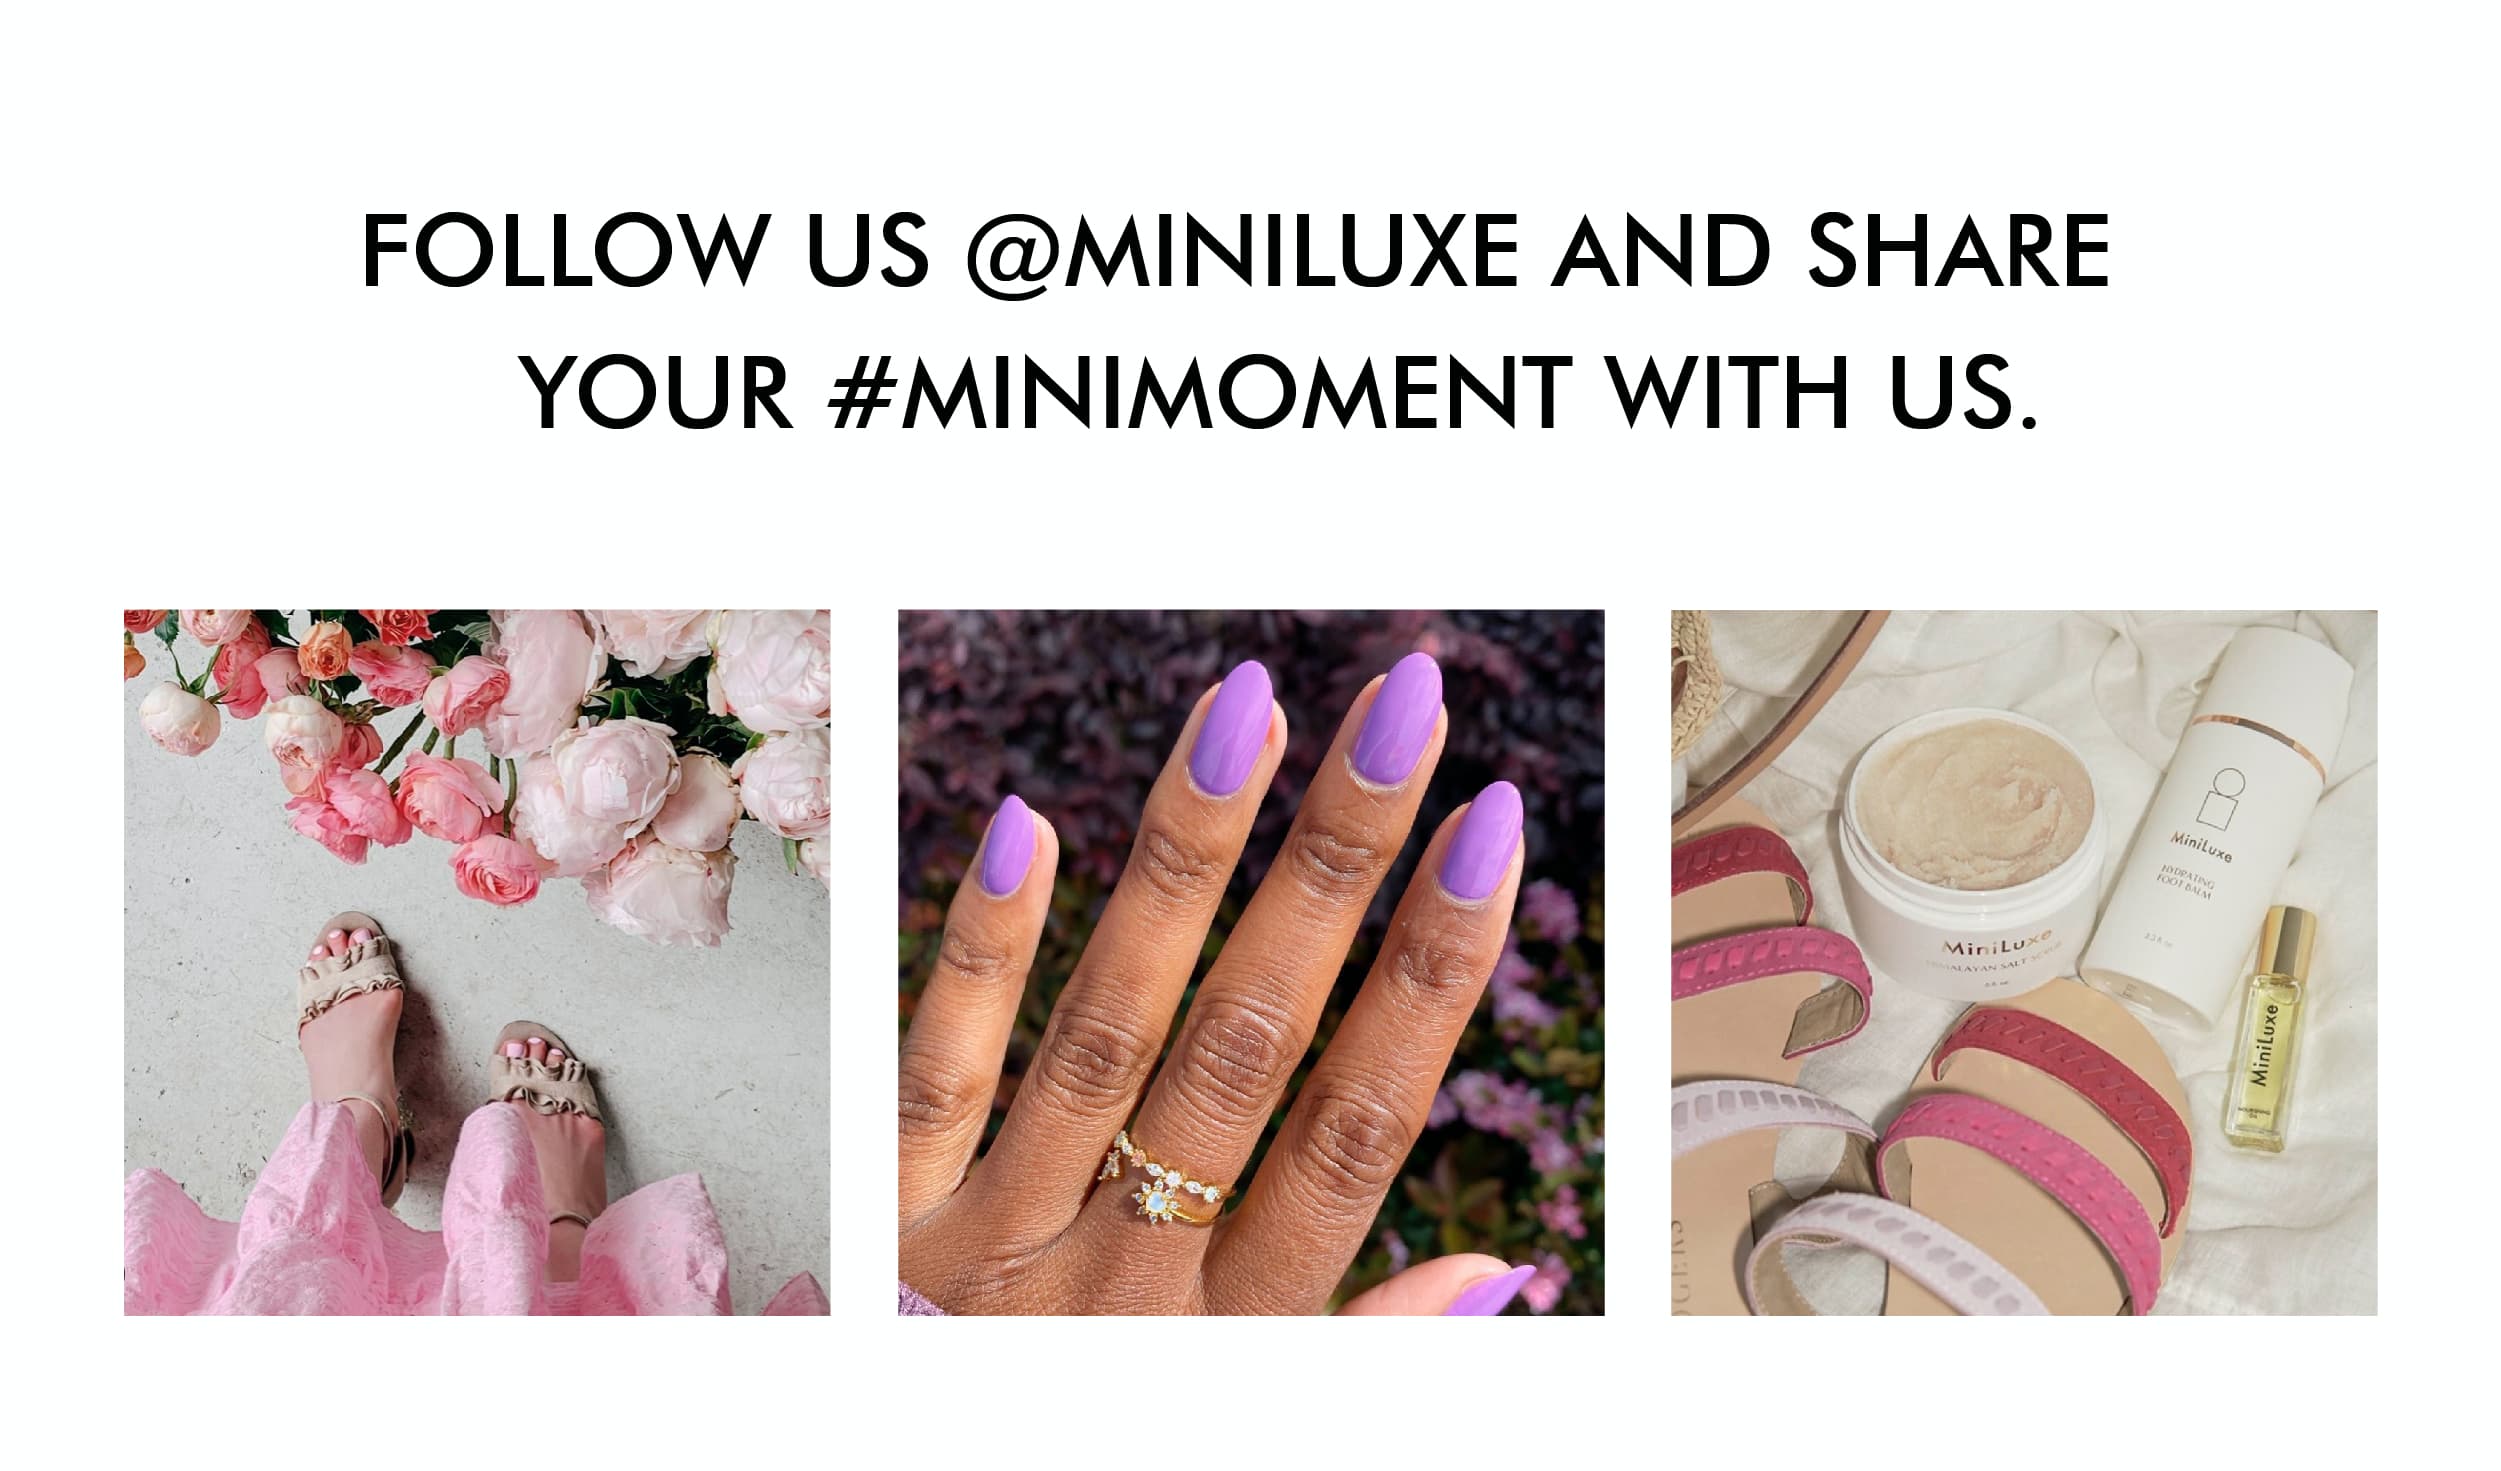 Follow us on Instagram @miniluxe